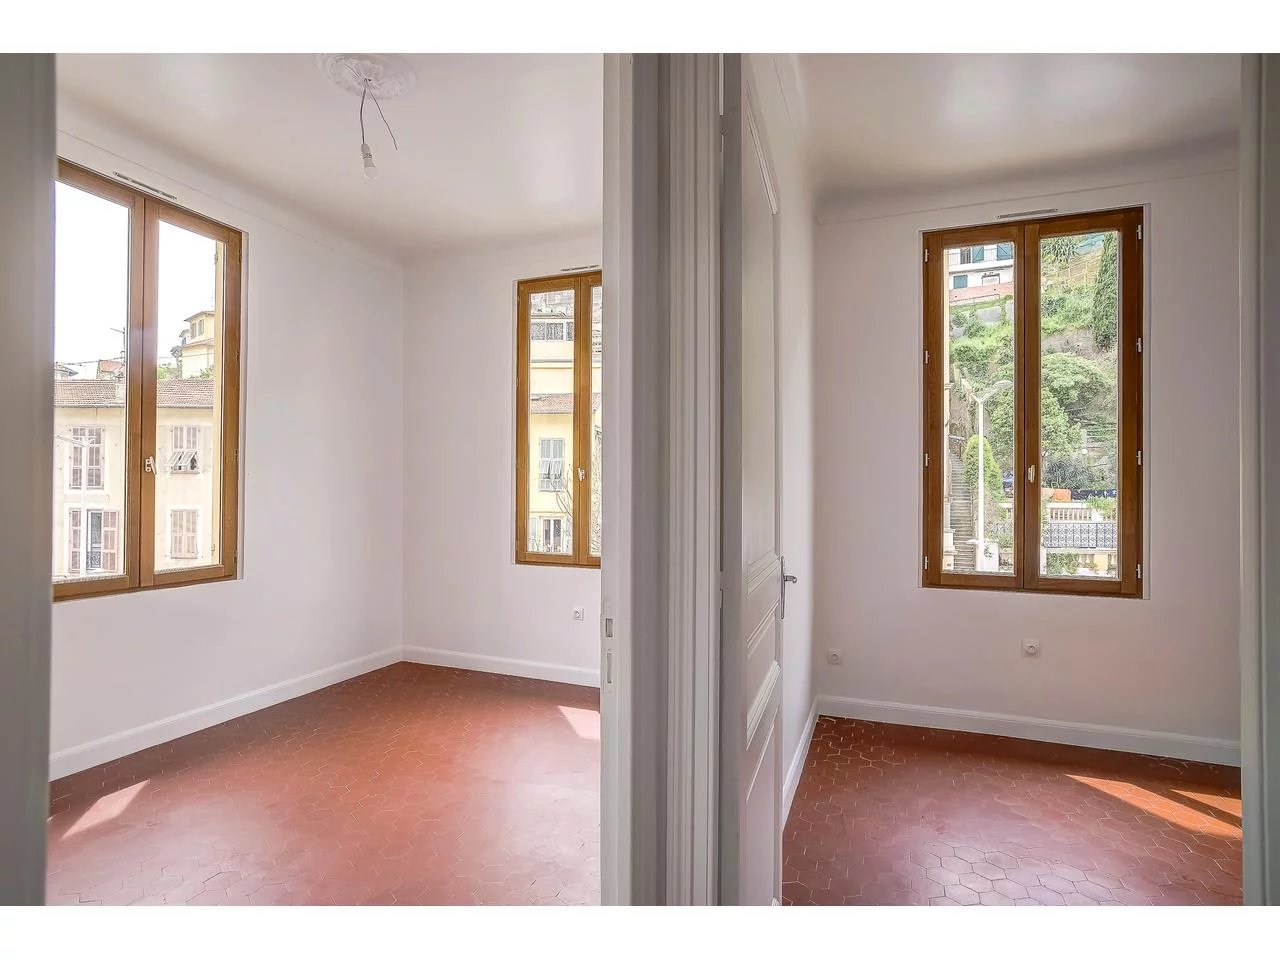 Appartement  2 Locali 36m2  In vendita   189 000 €